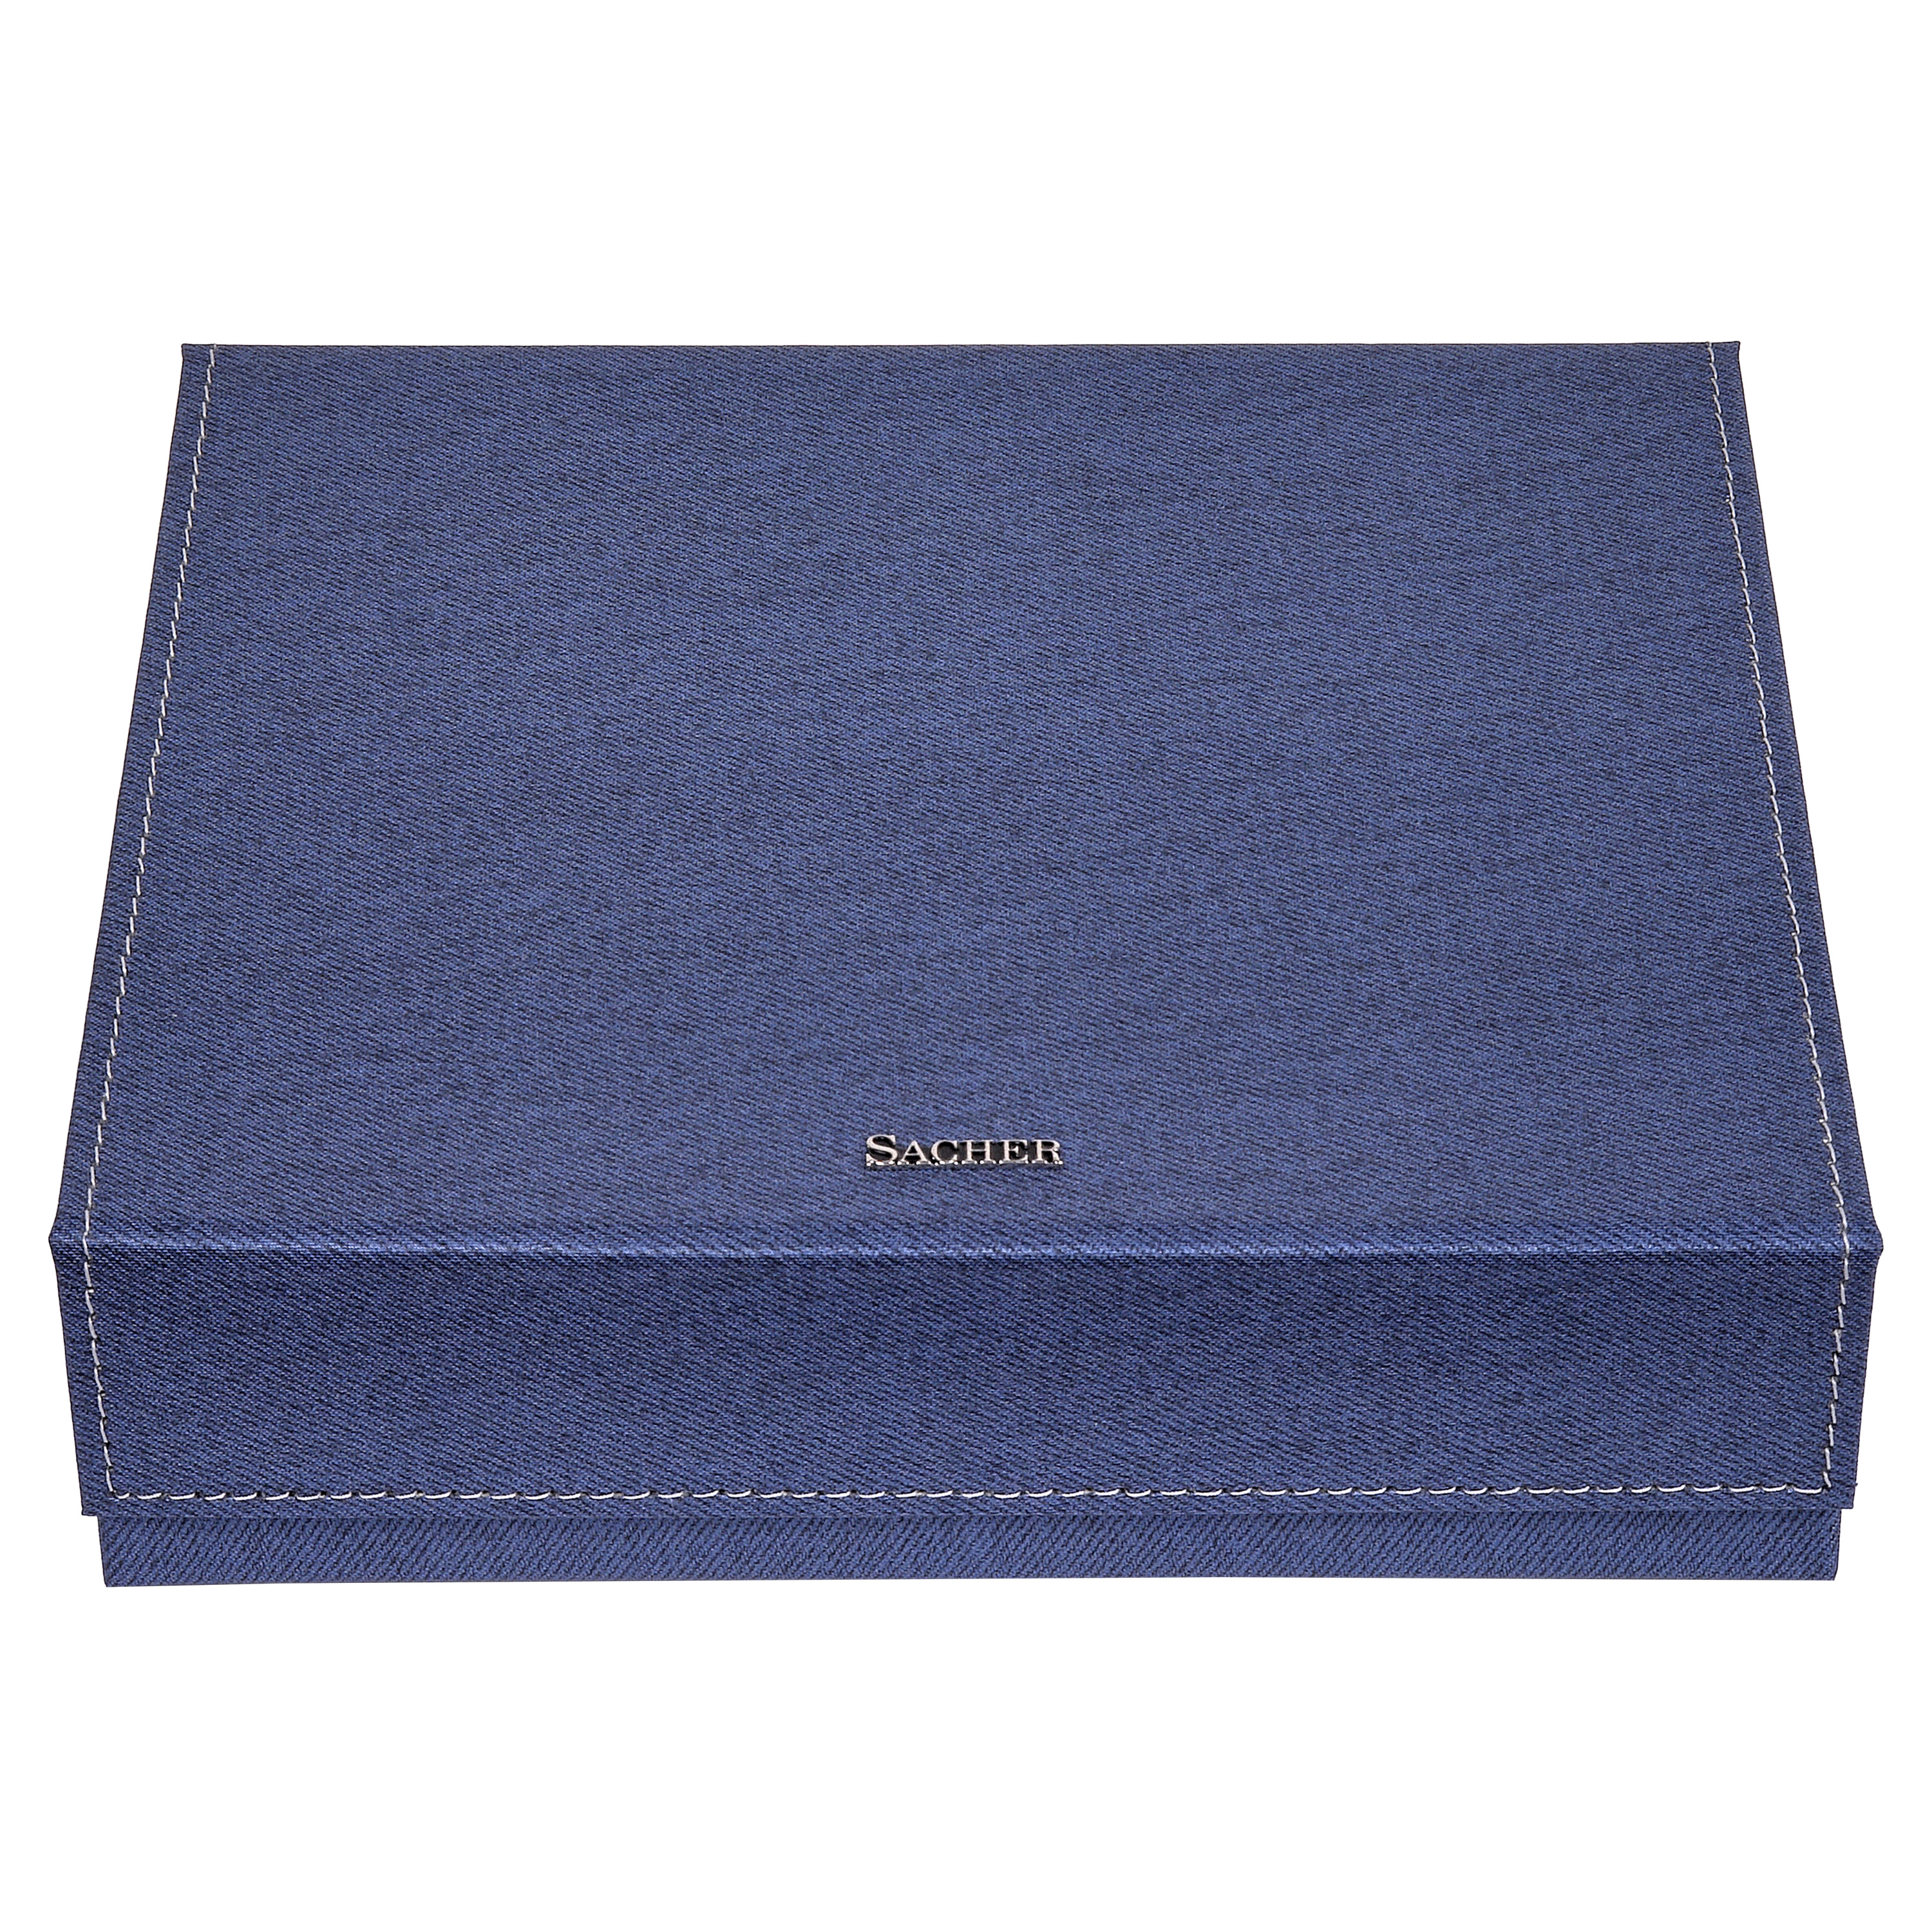 Nora jewellery box denim / blue